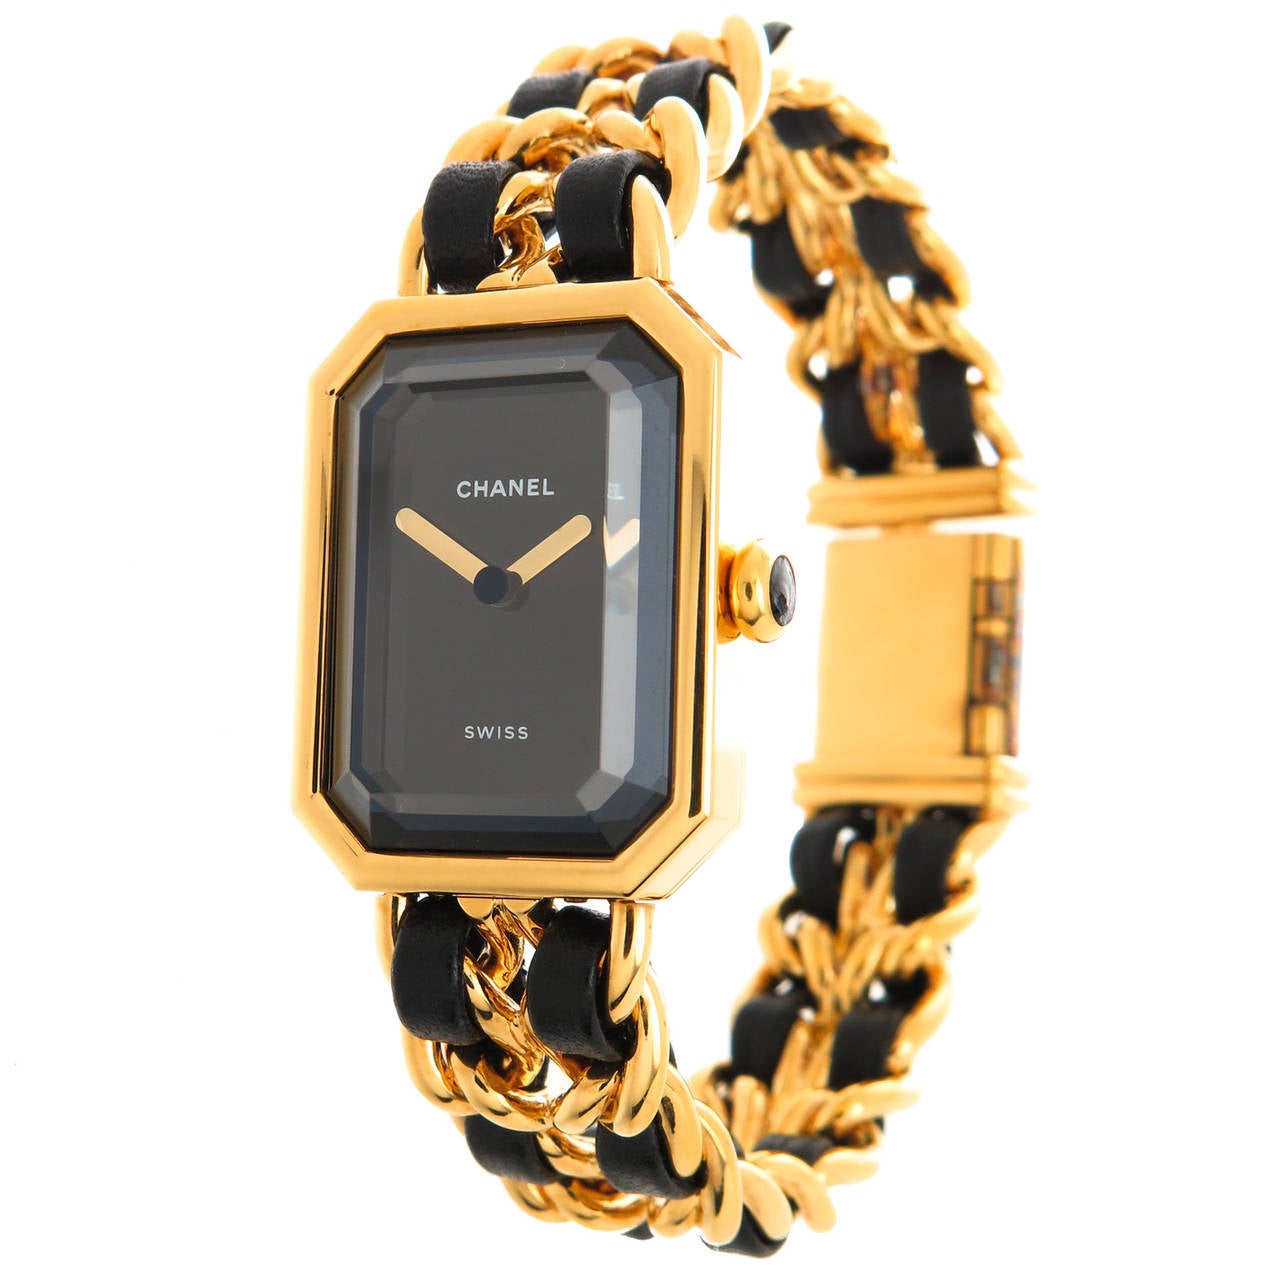 Chanel Lady's Gold Plated Premier Quartz Wristwatch circa 1990s at 1stdibs